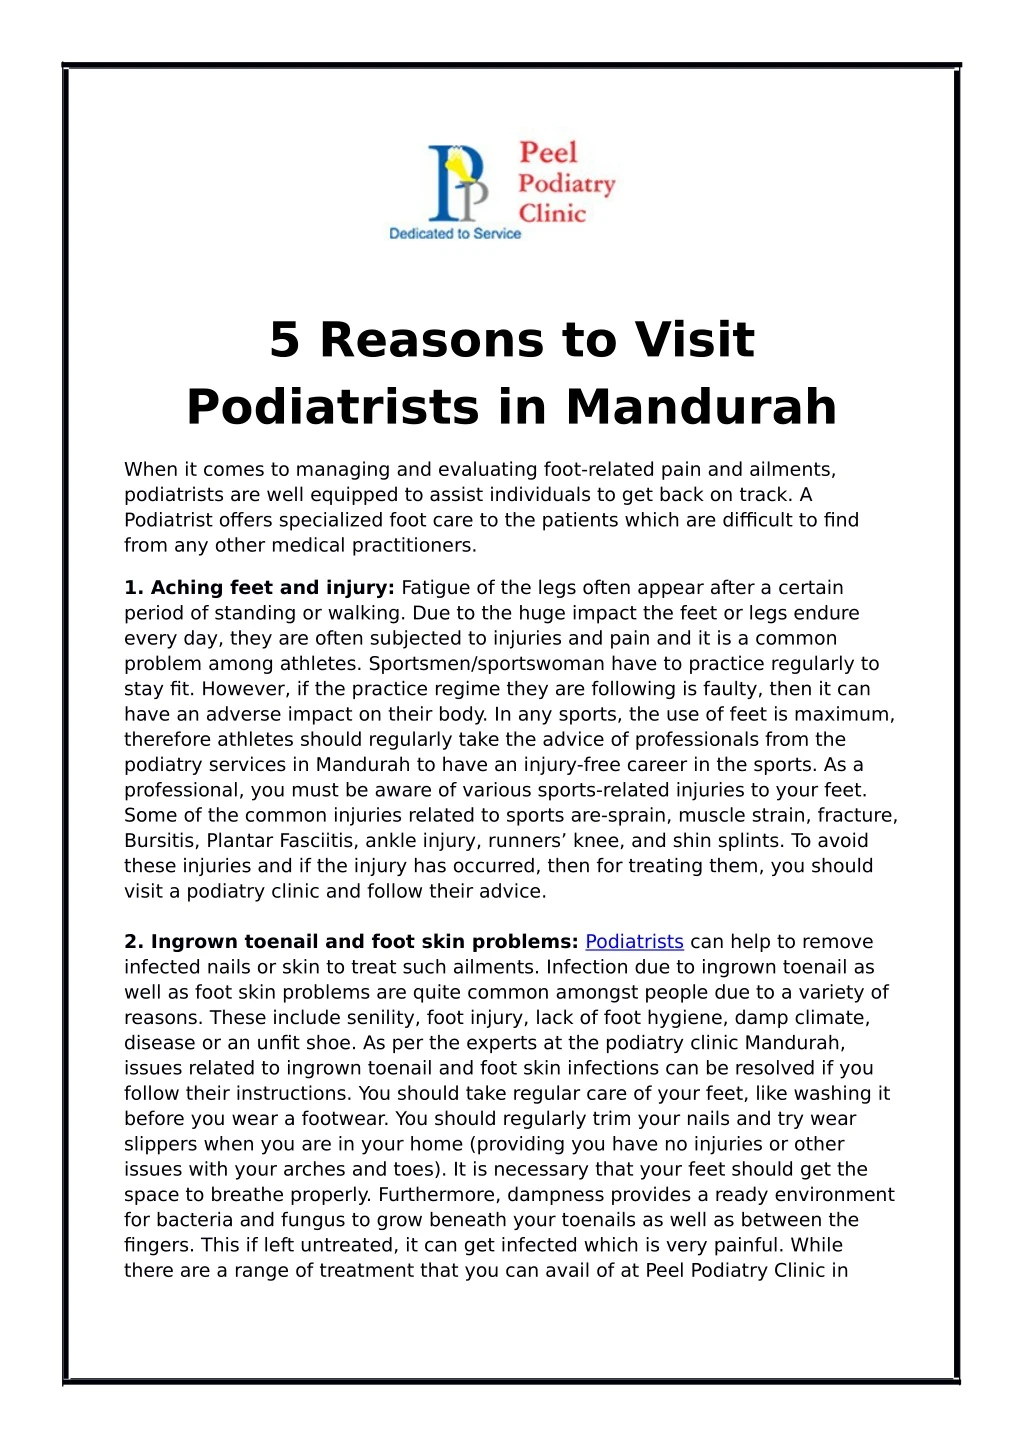 5 reasons to visit podiatrists in mandurah